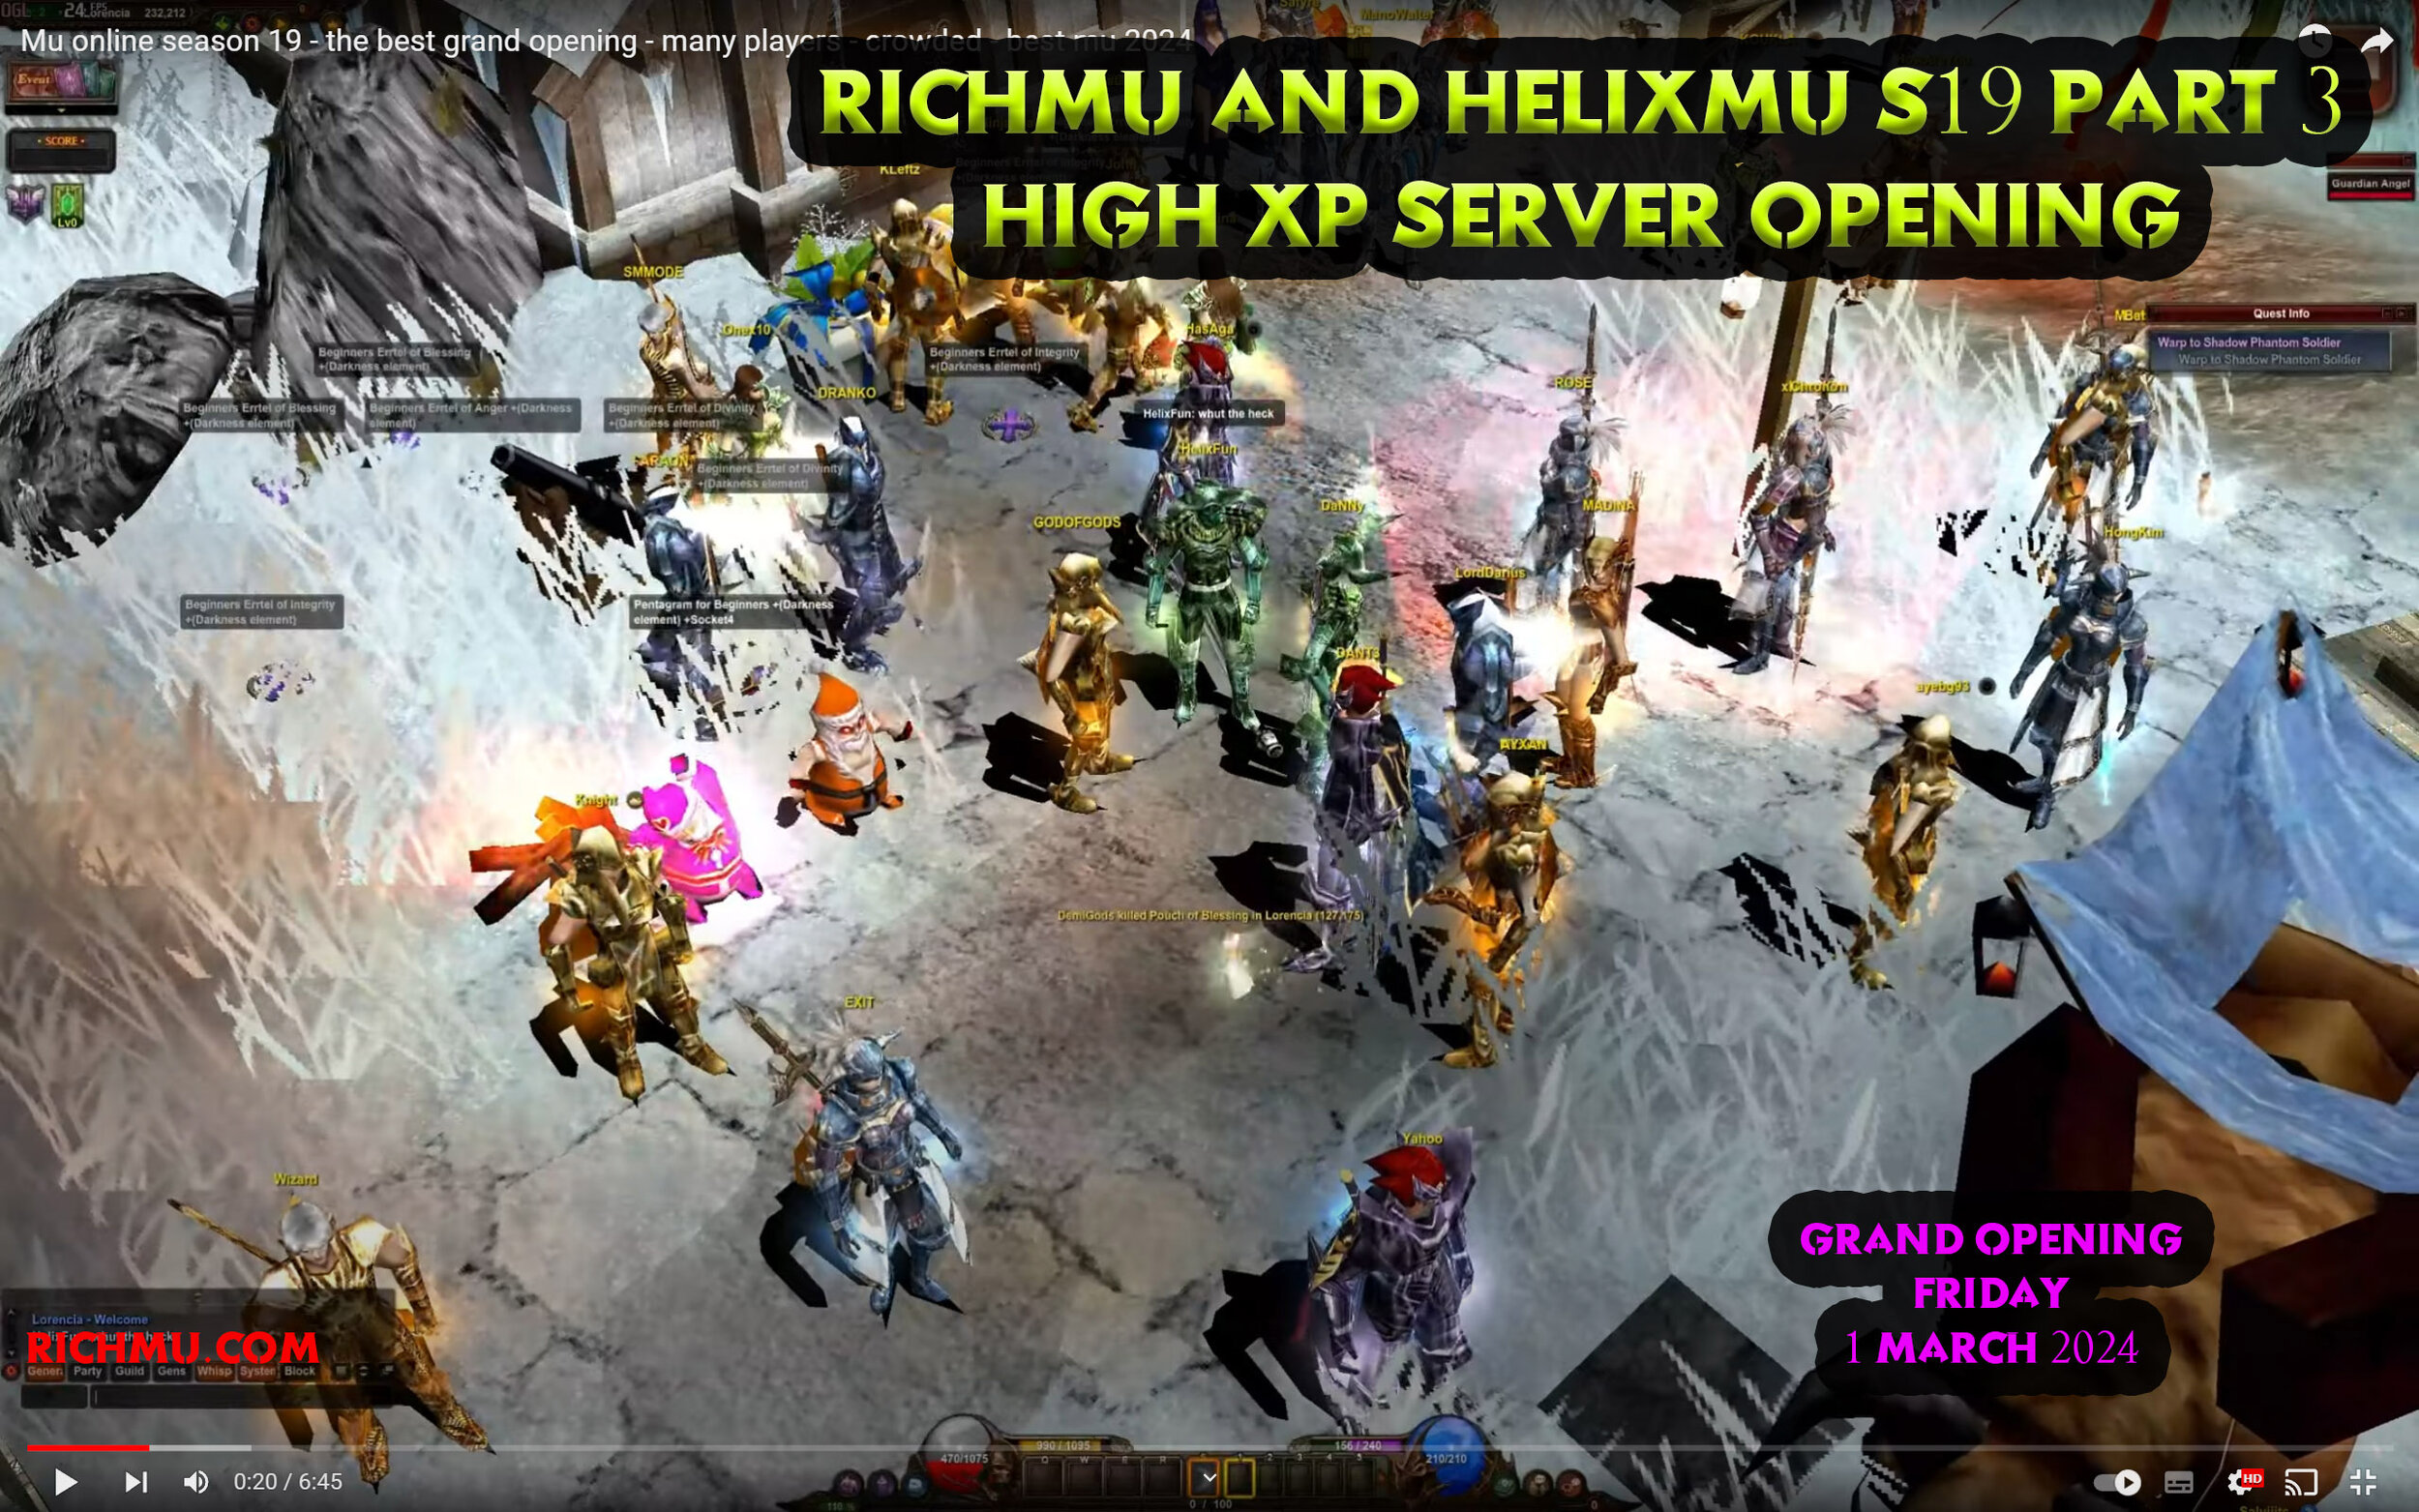 richmu2 - RICHMU Season 19 Part 3 - easy 99999x - opens friday 1 march 2024 - RaGEZONE Forums